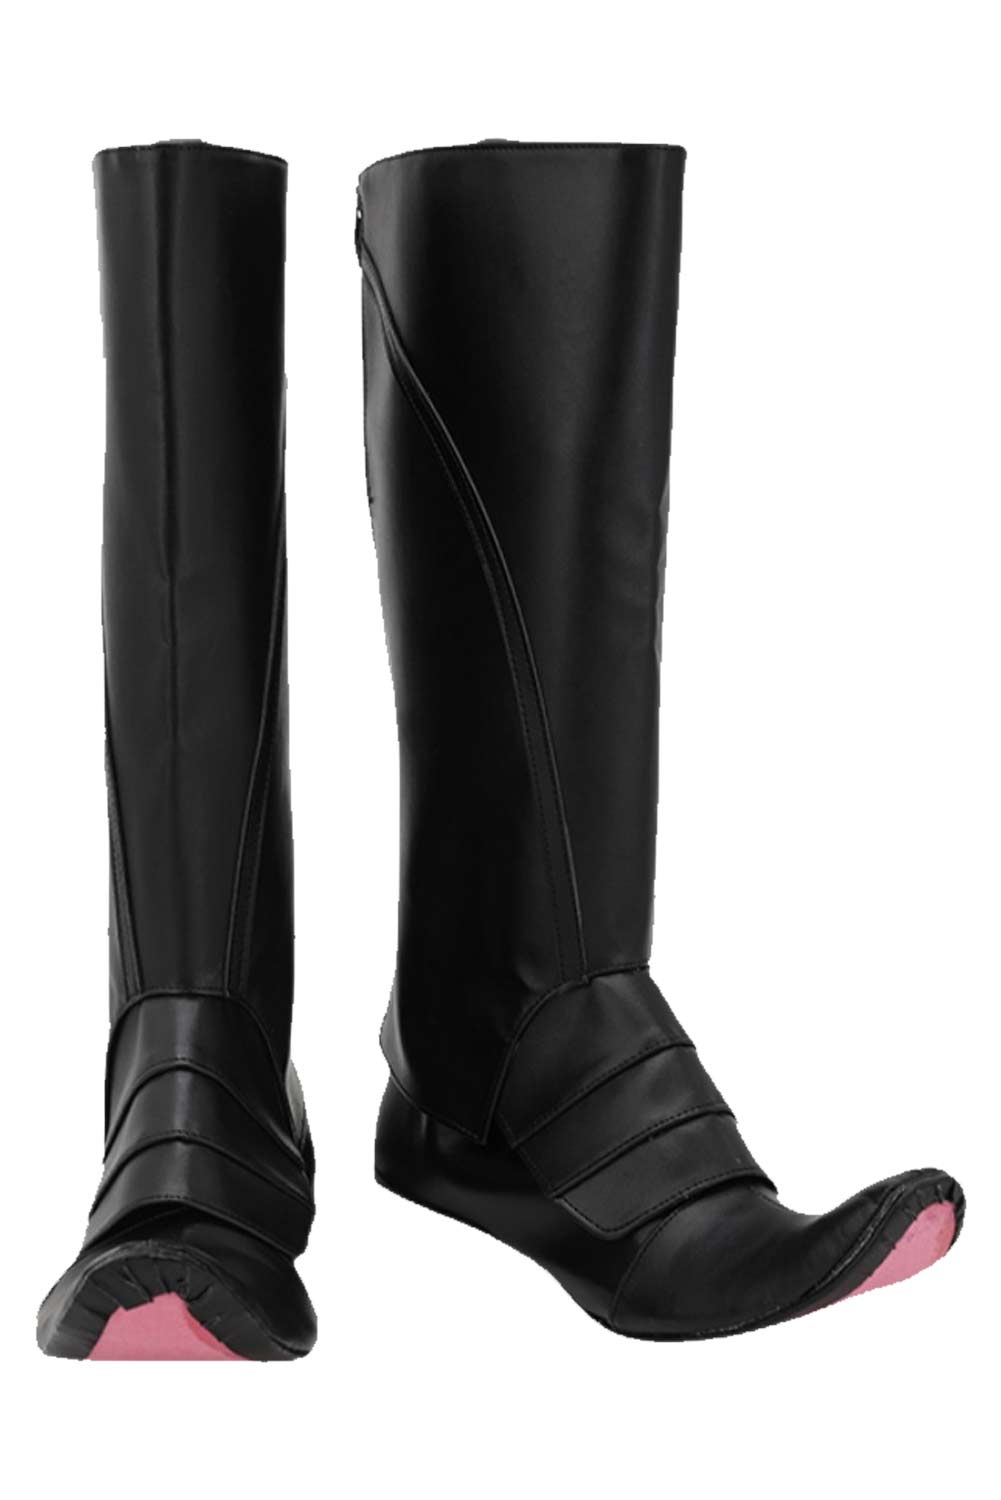 Movie Ahsoka Tano Cosplay Black PU Leather Shoes Boots Halloween Custom Made Costumes Accessory